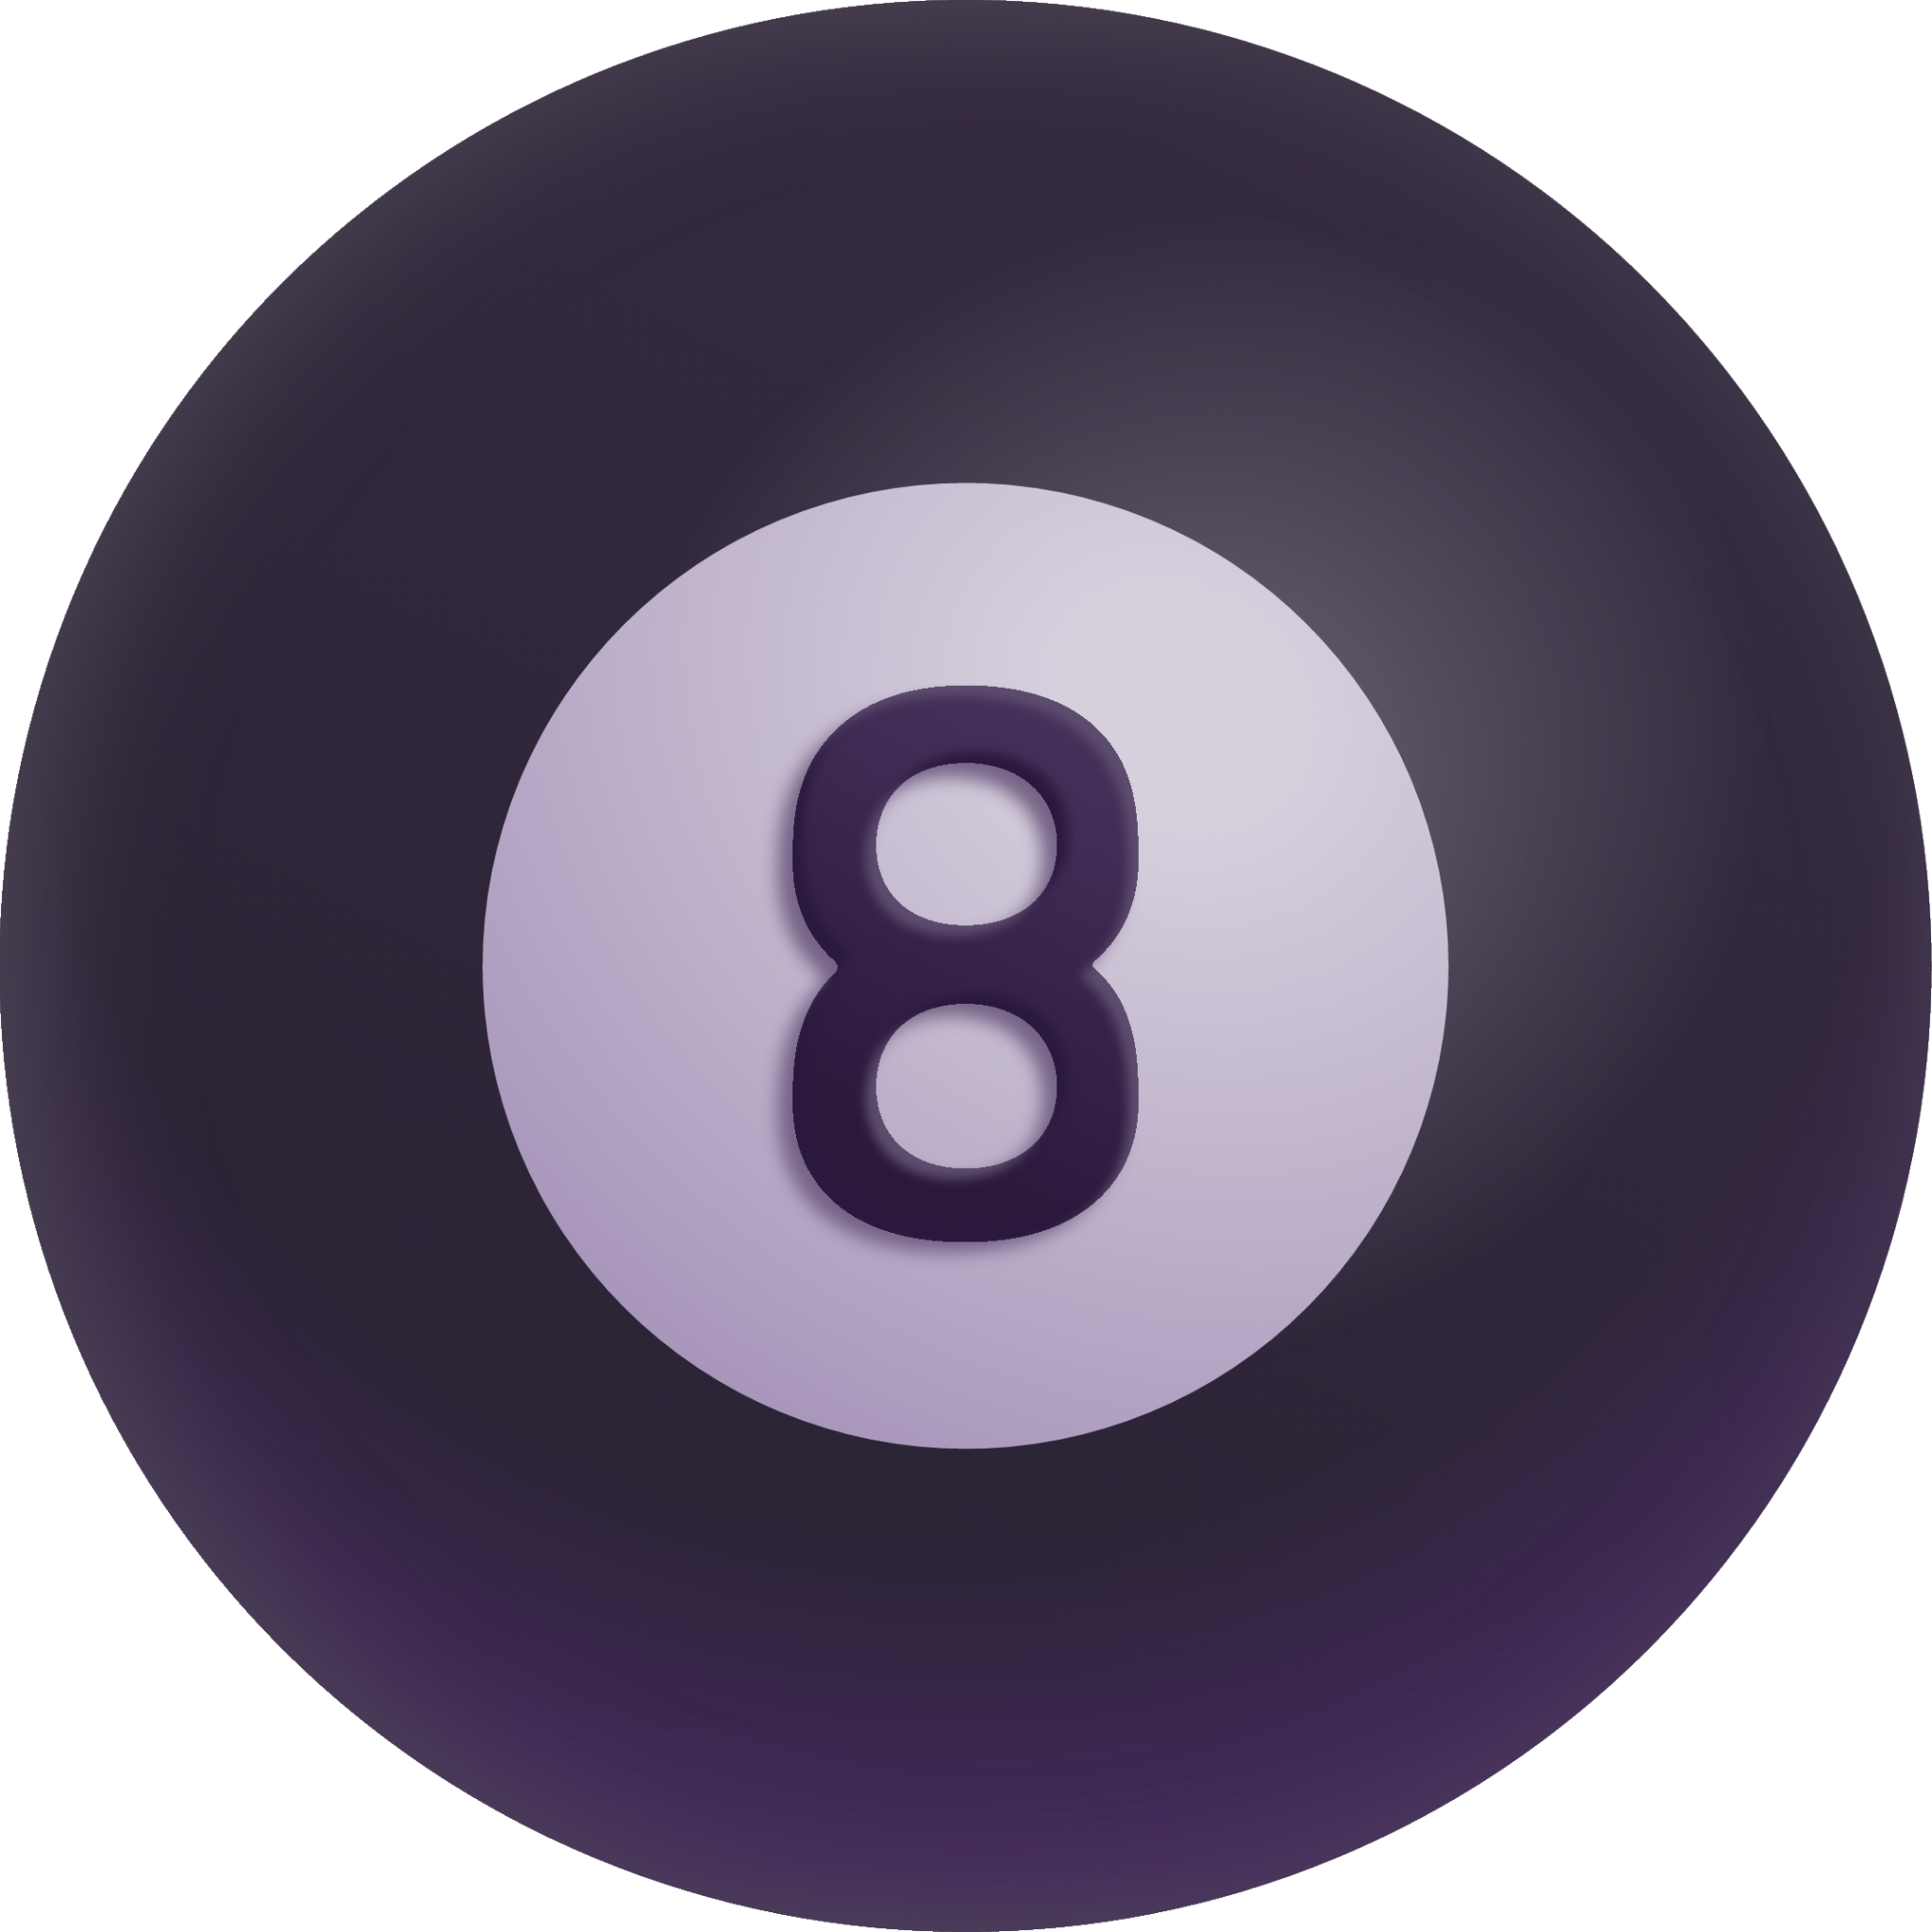 pool 8 ball emoji